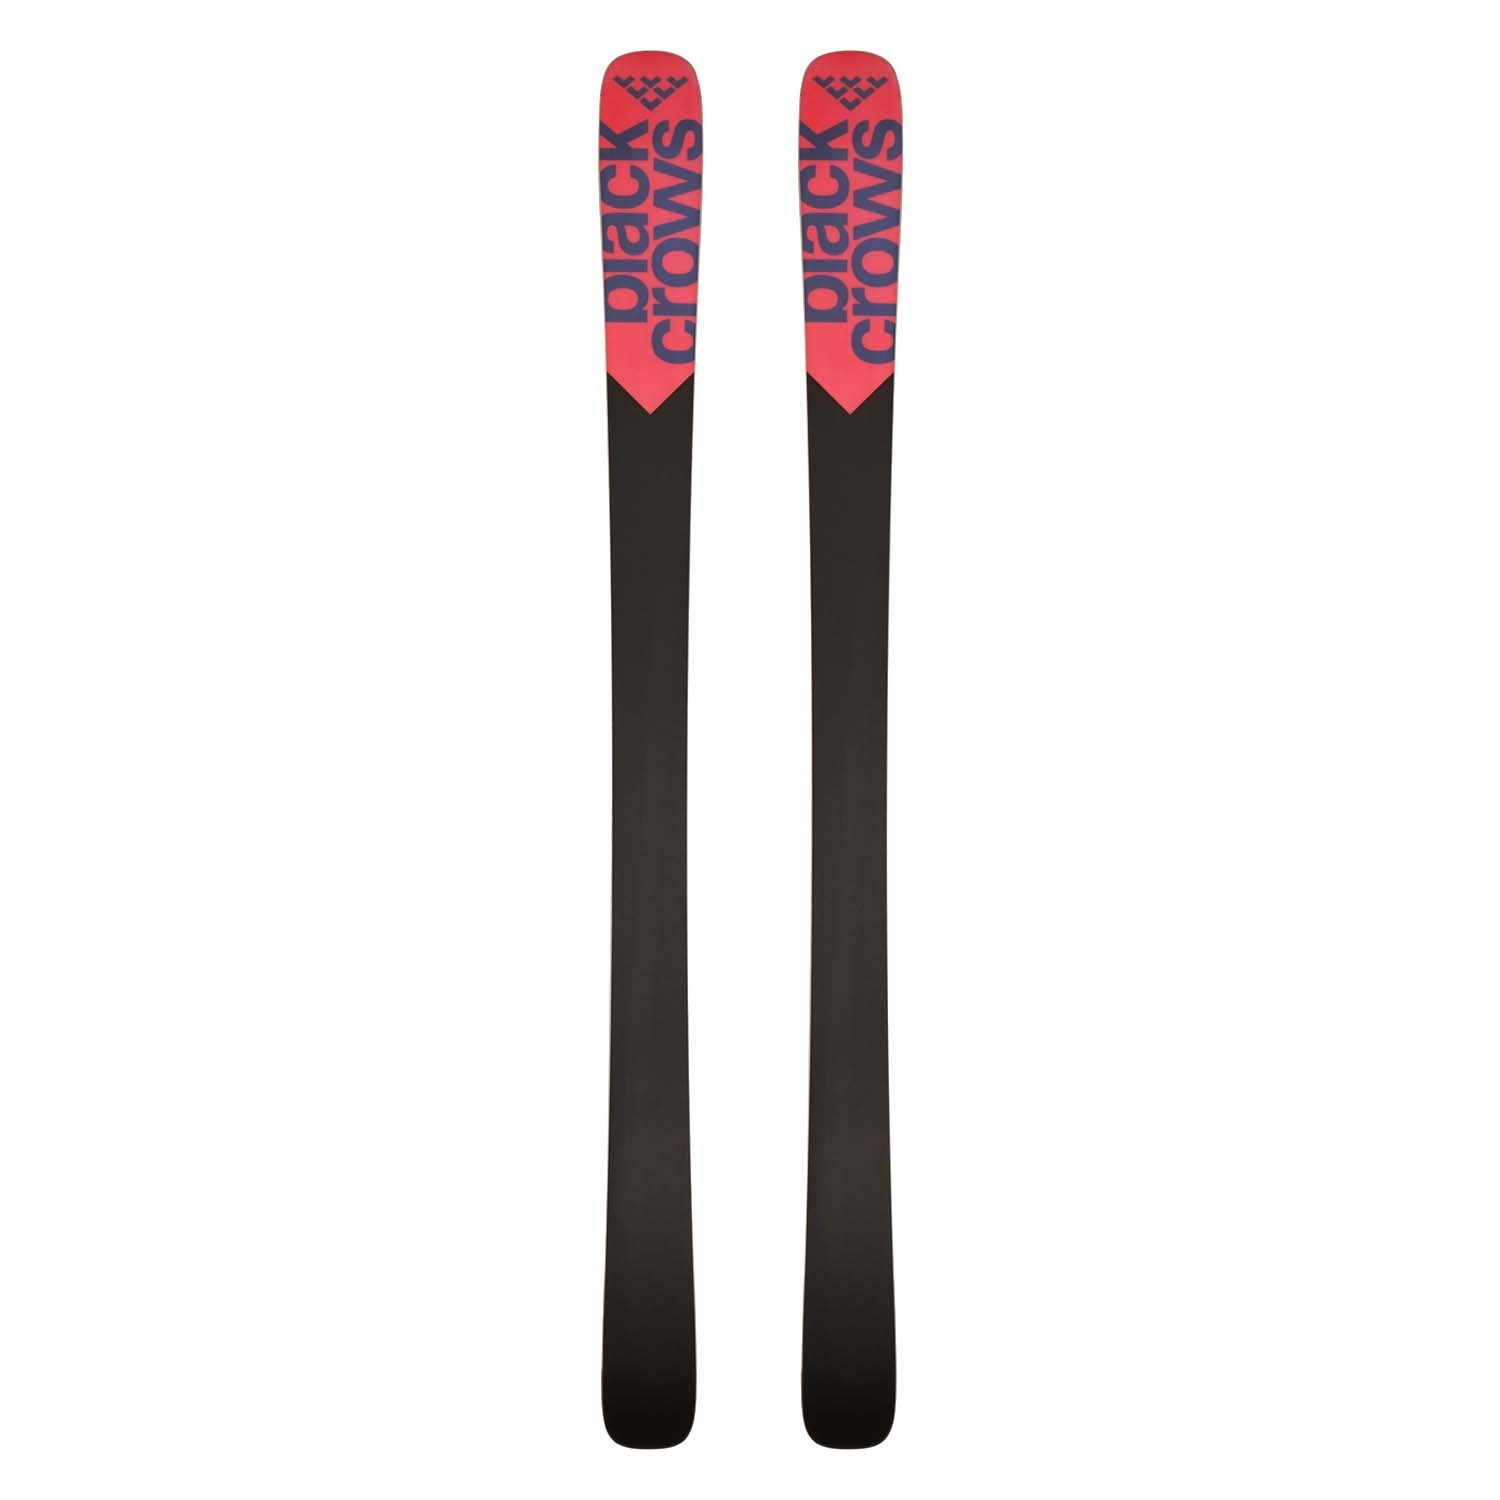 Black Crows Camox Skis 2022